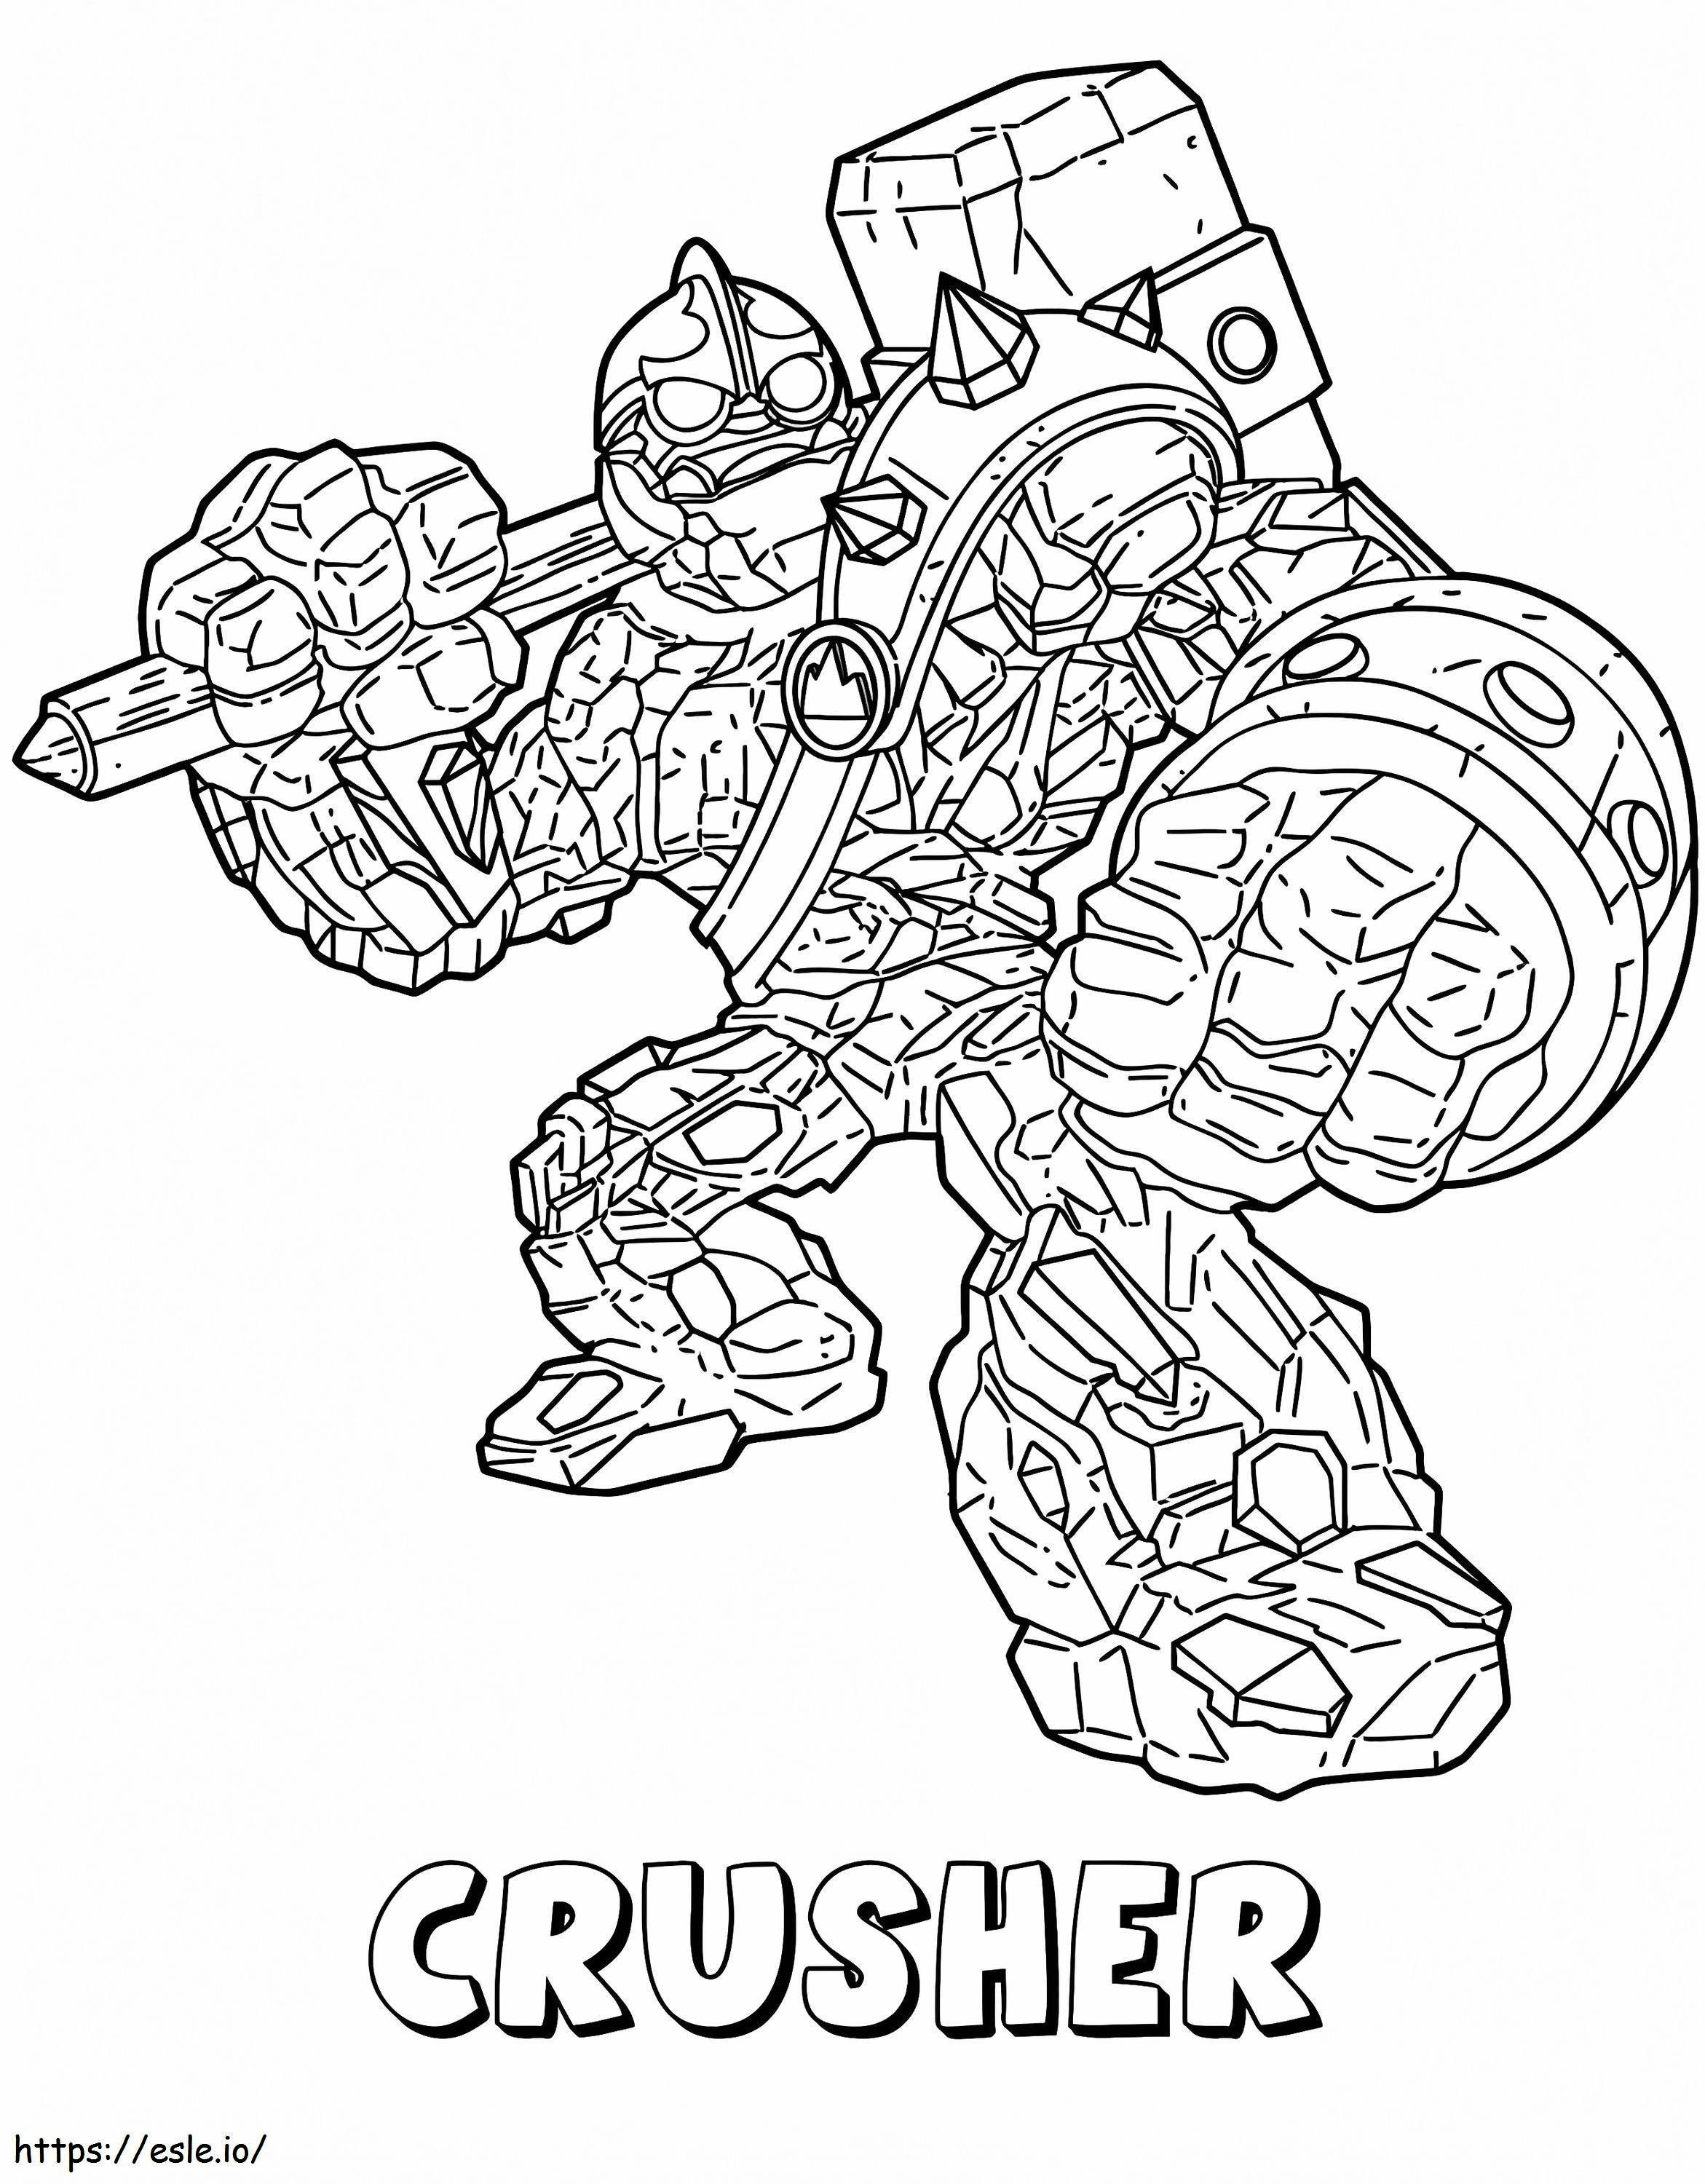 Crusher In Skylander Giants coloring page